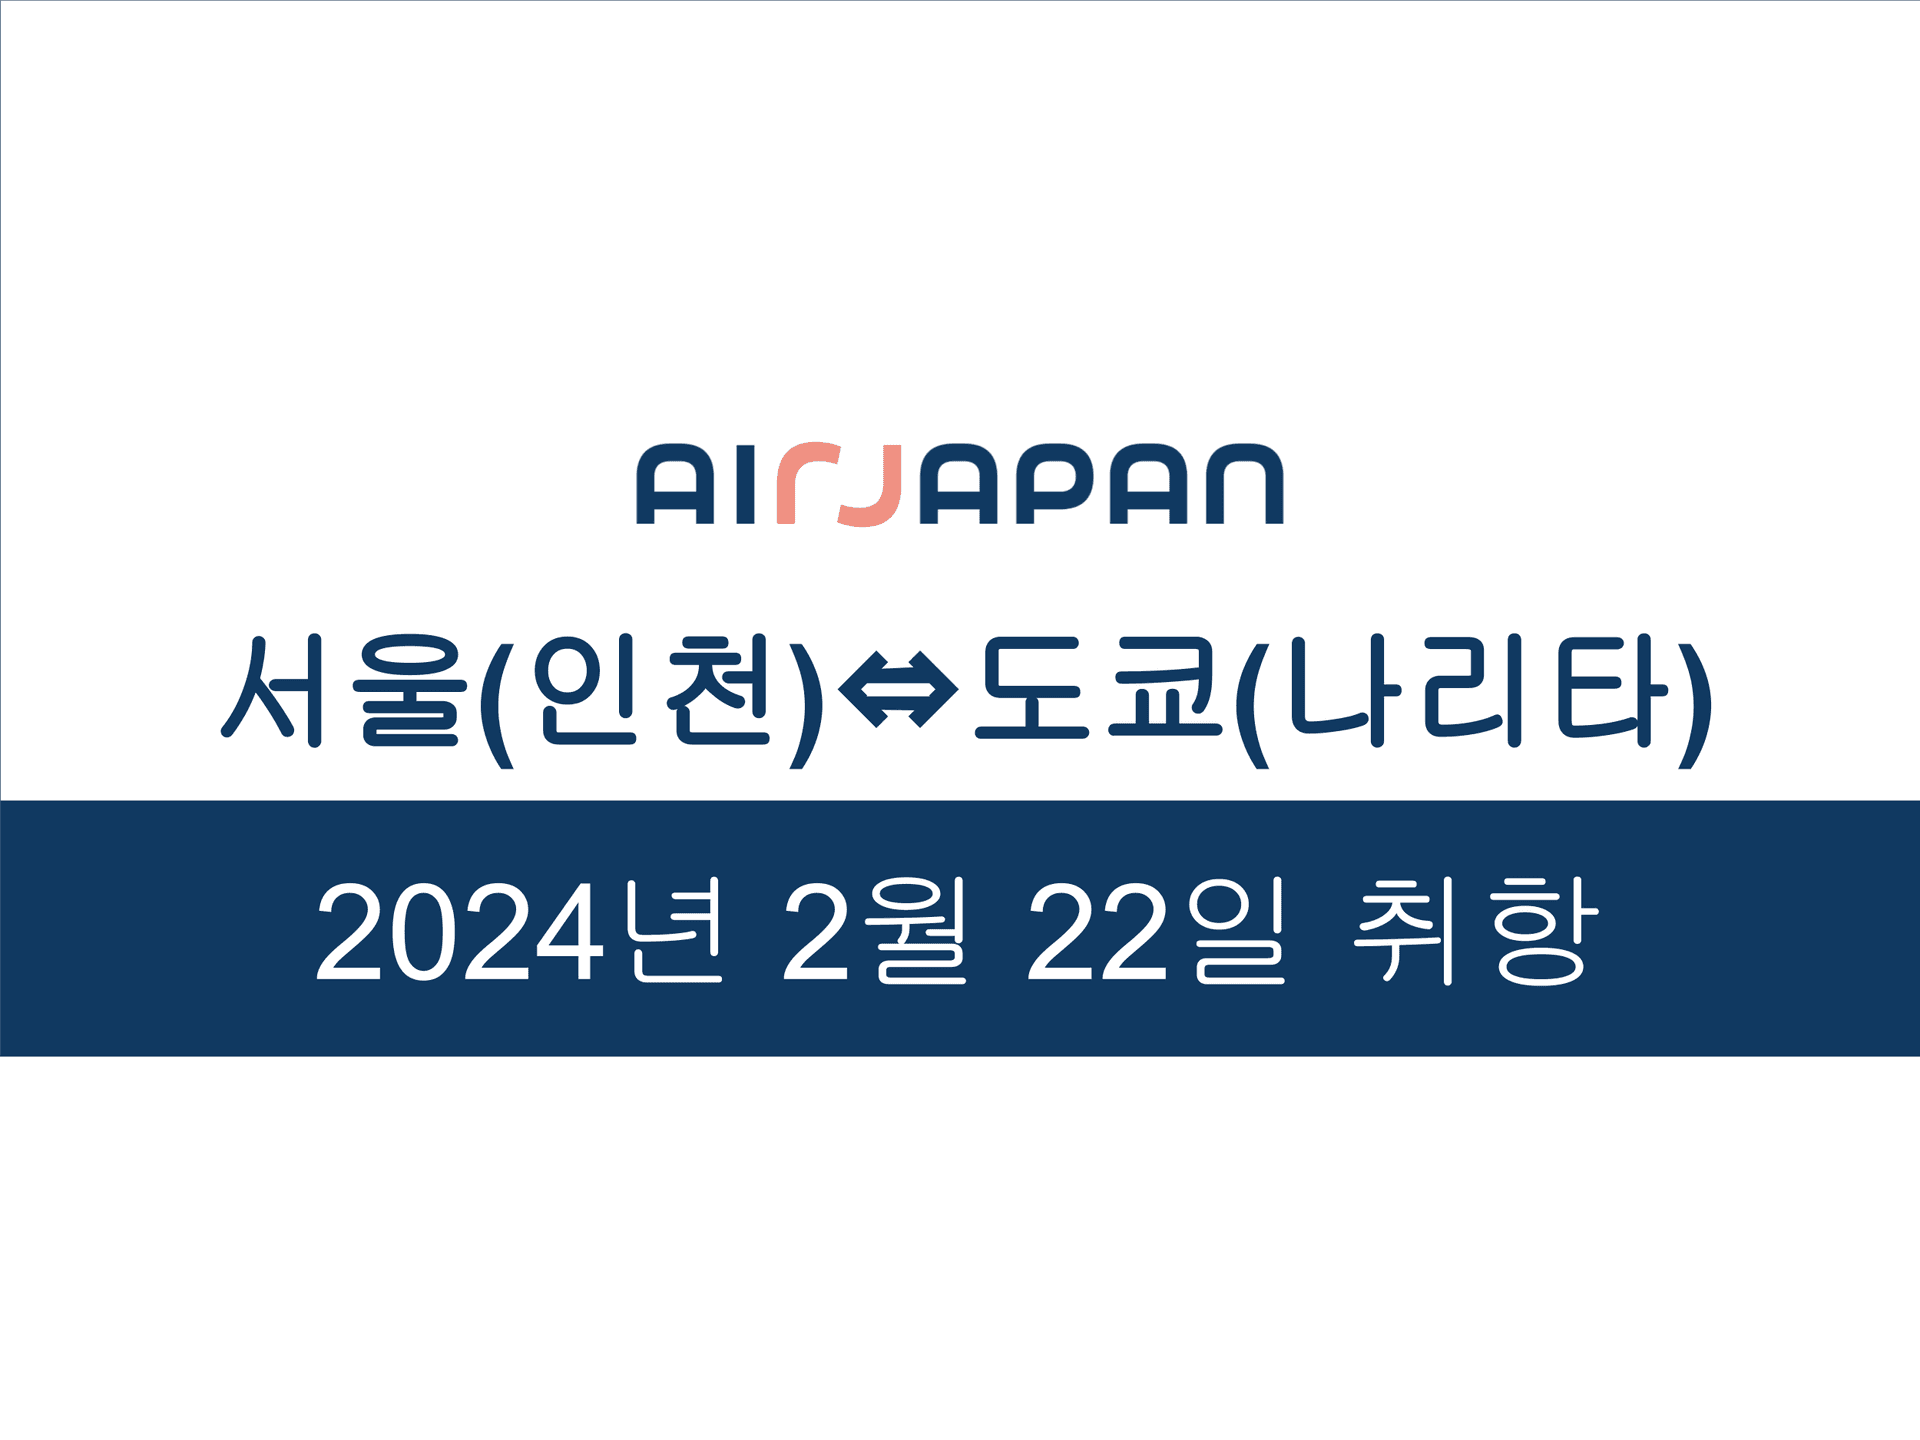 AirJapan은 2024년 2월 22일(목)부터 서울(인천)⇔나리타에 취항합니다!